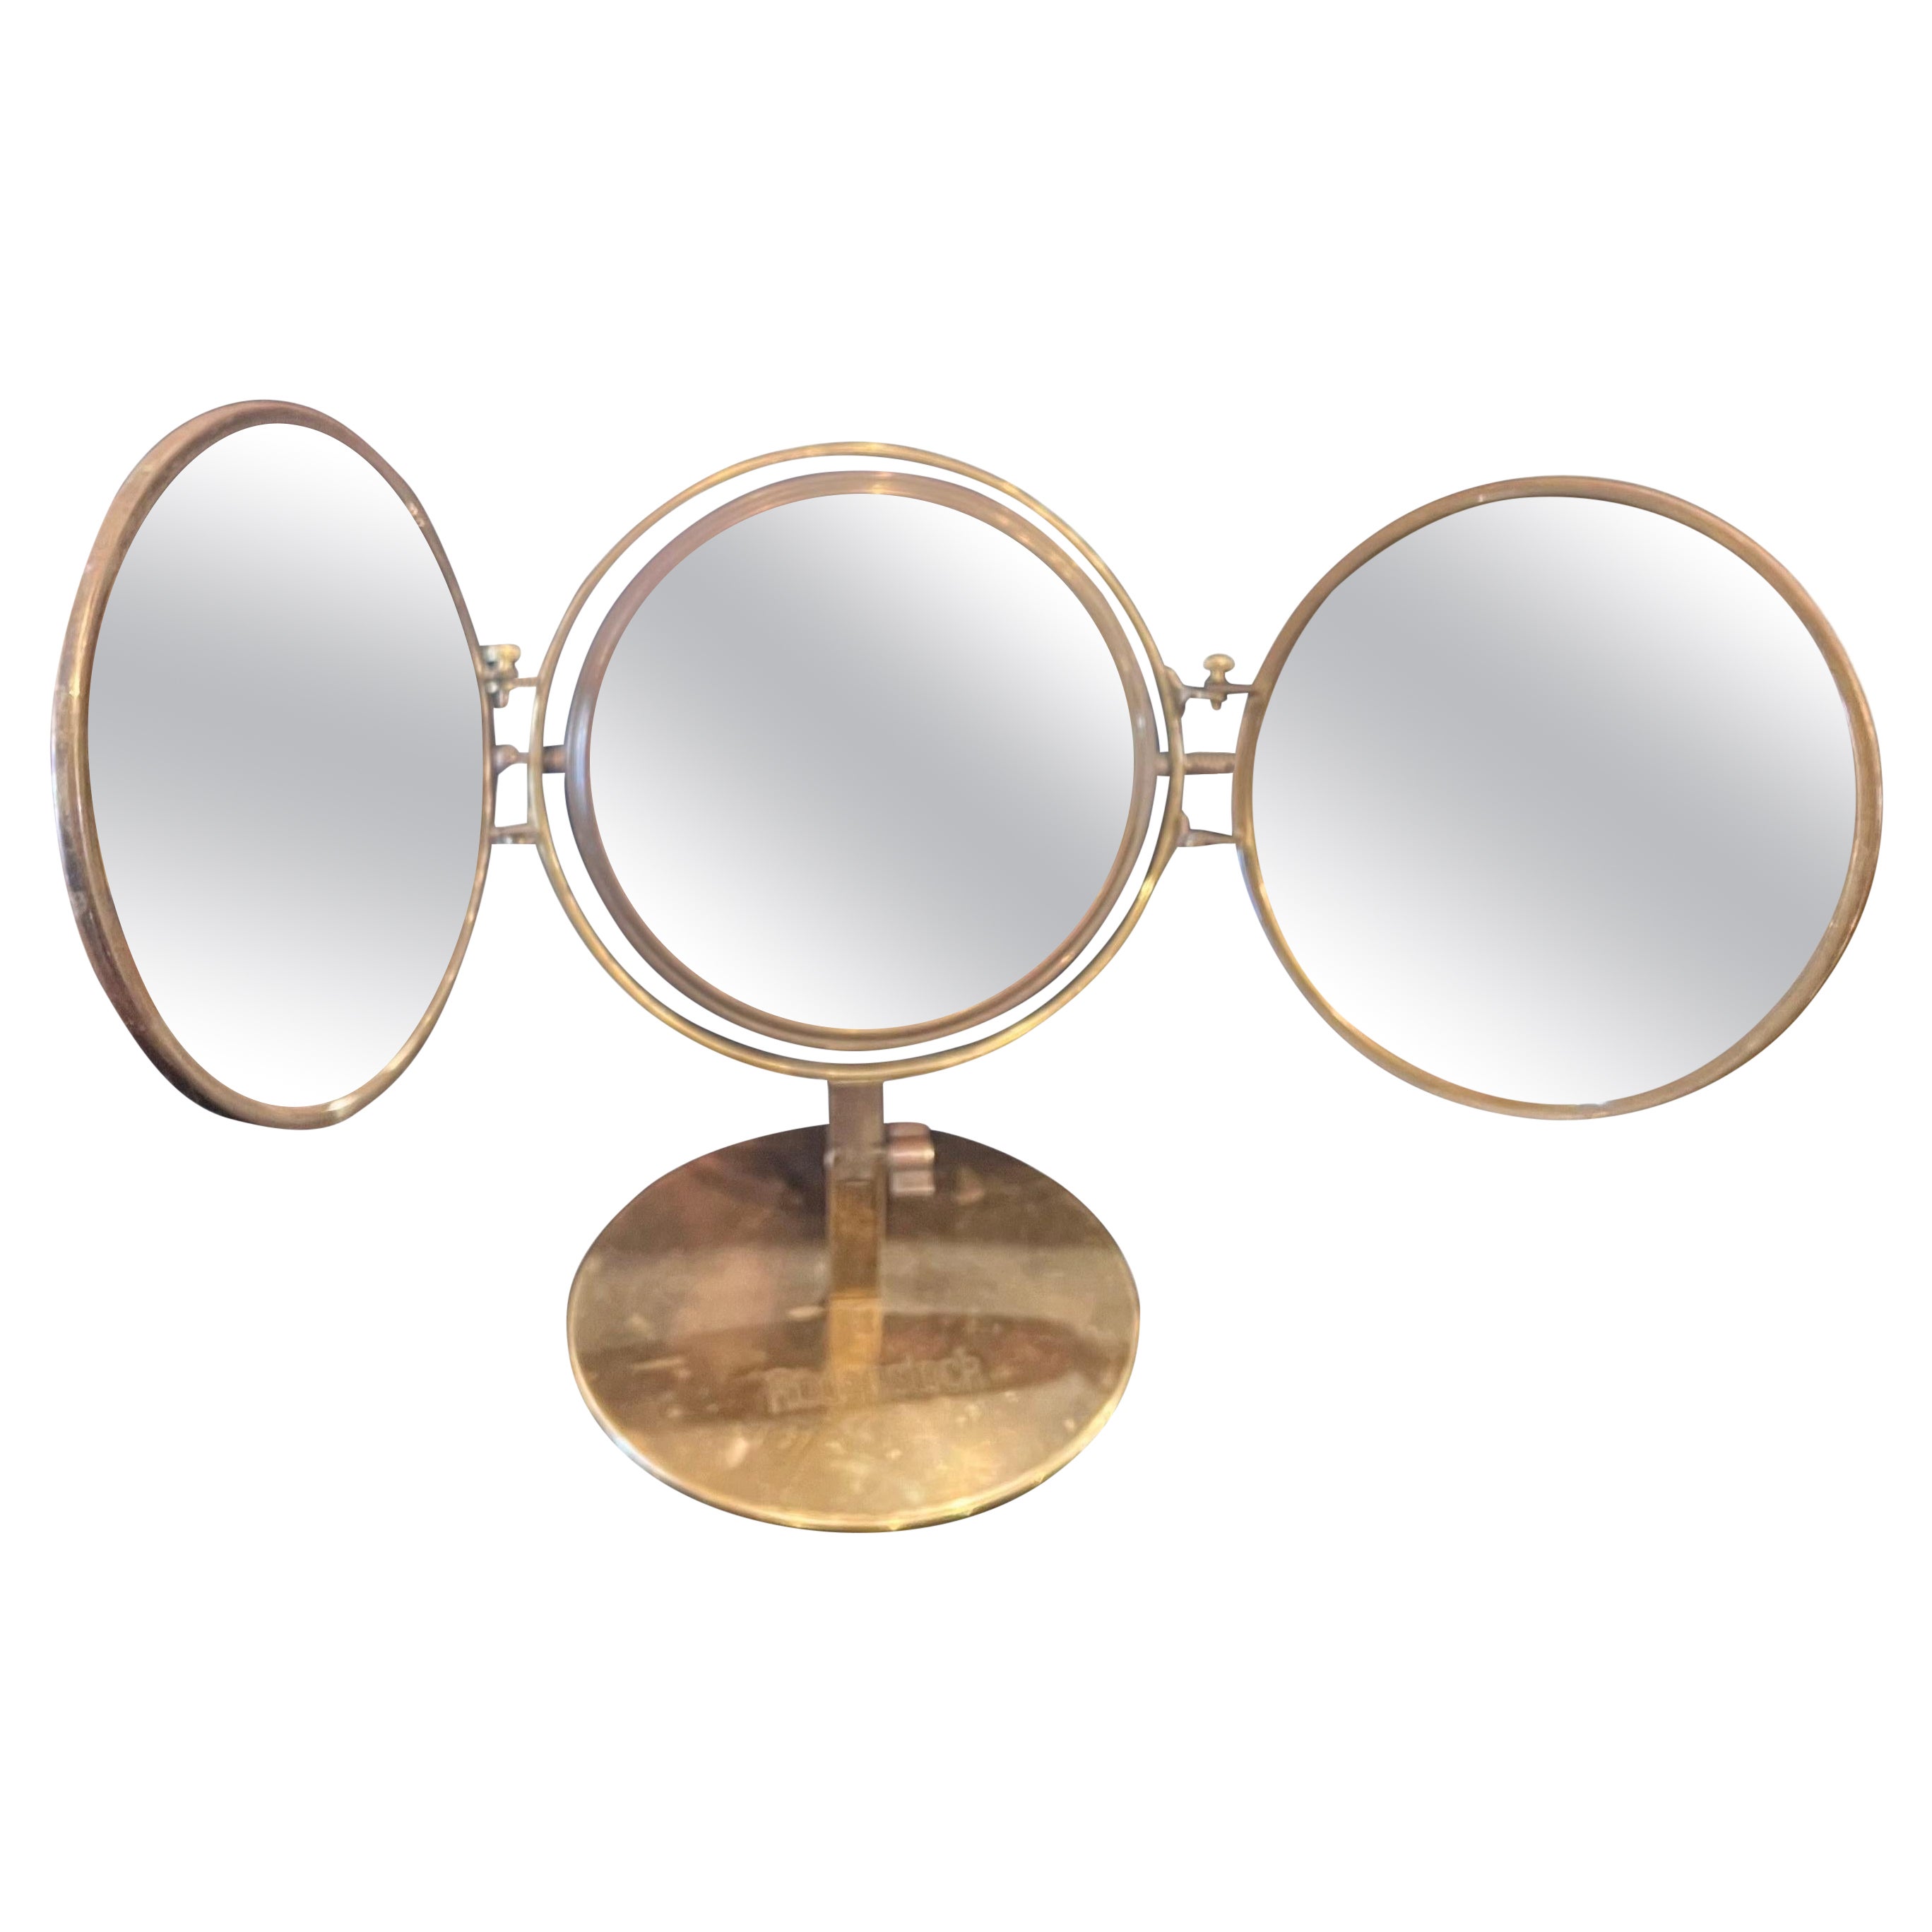 Art Deco Rodenstock Multidirectional Mirror 3 Way Vintage from Optometrist Shop